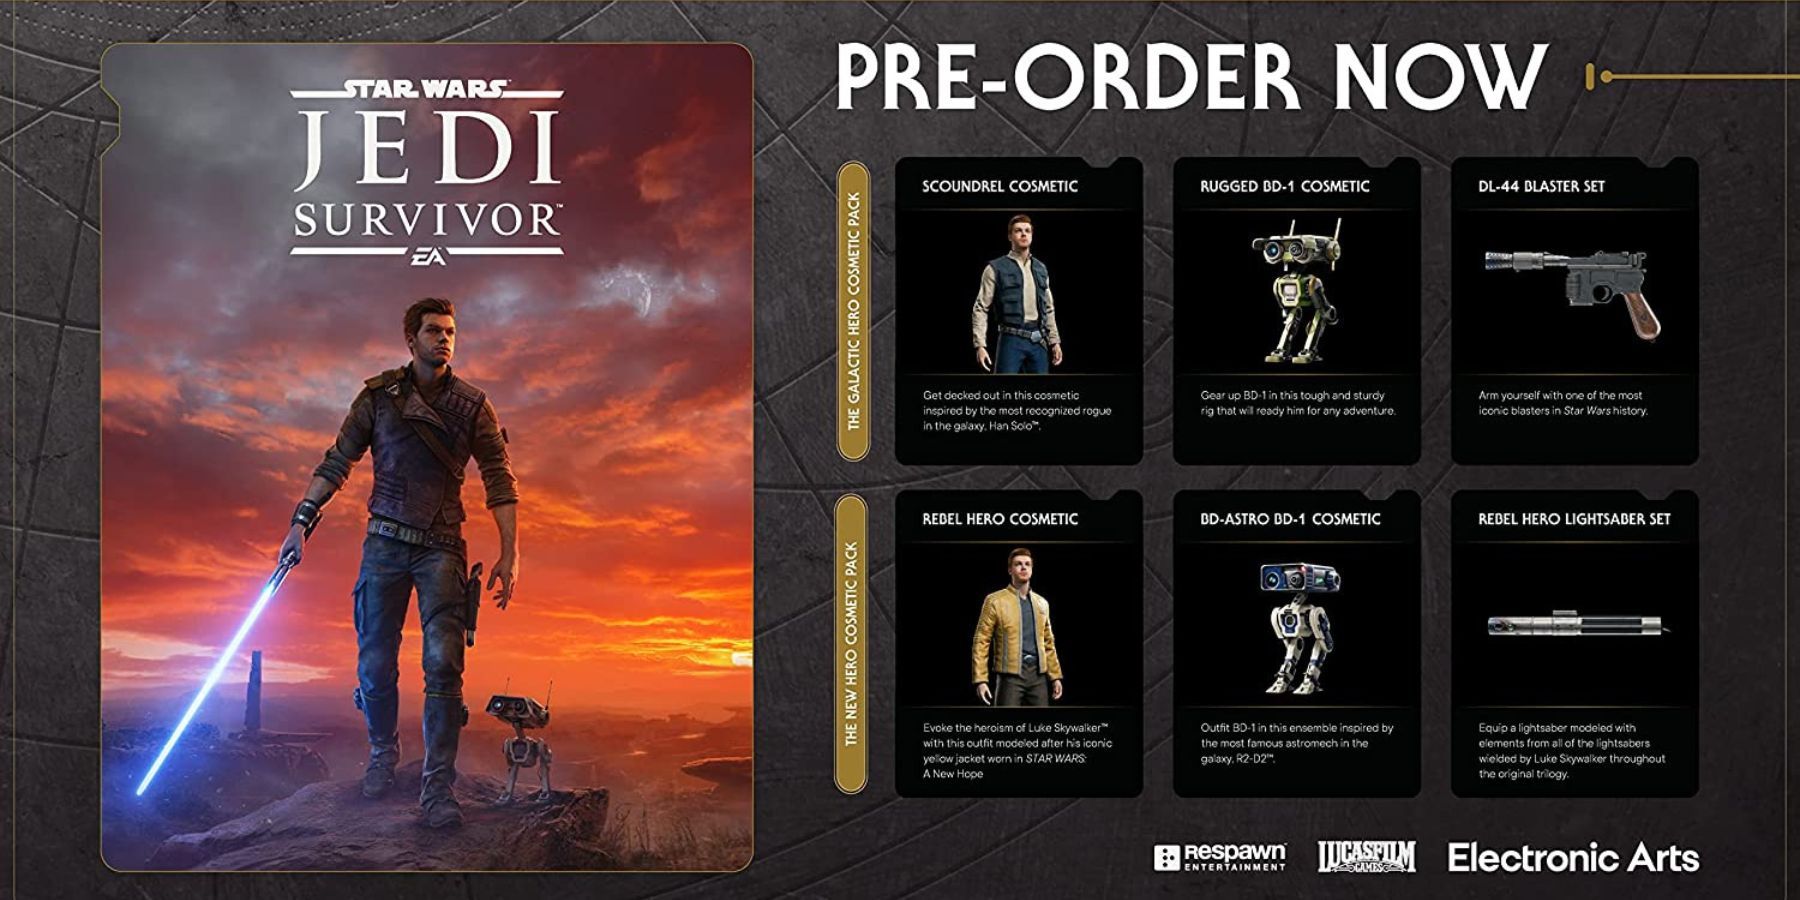 The new PlayStation 5 + Star Wars Jedi: Survivor bundle is